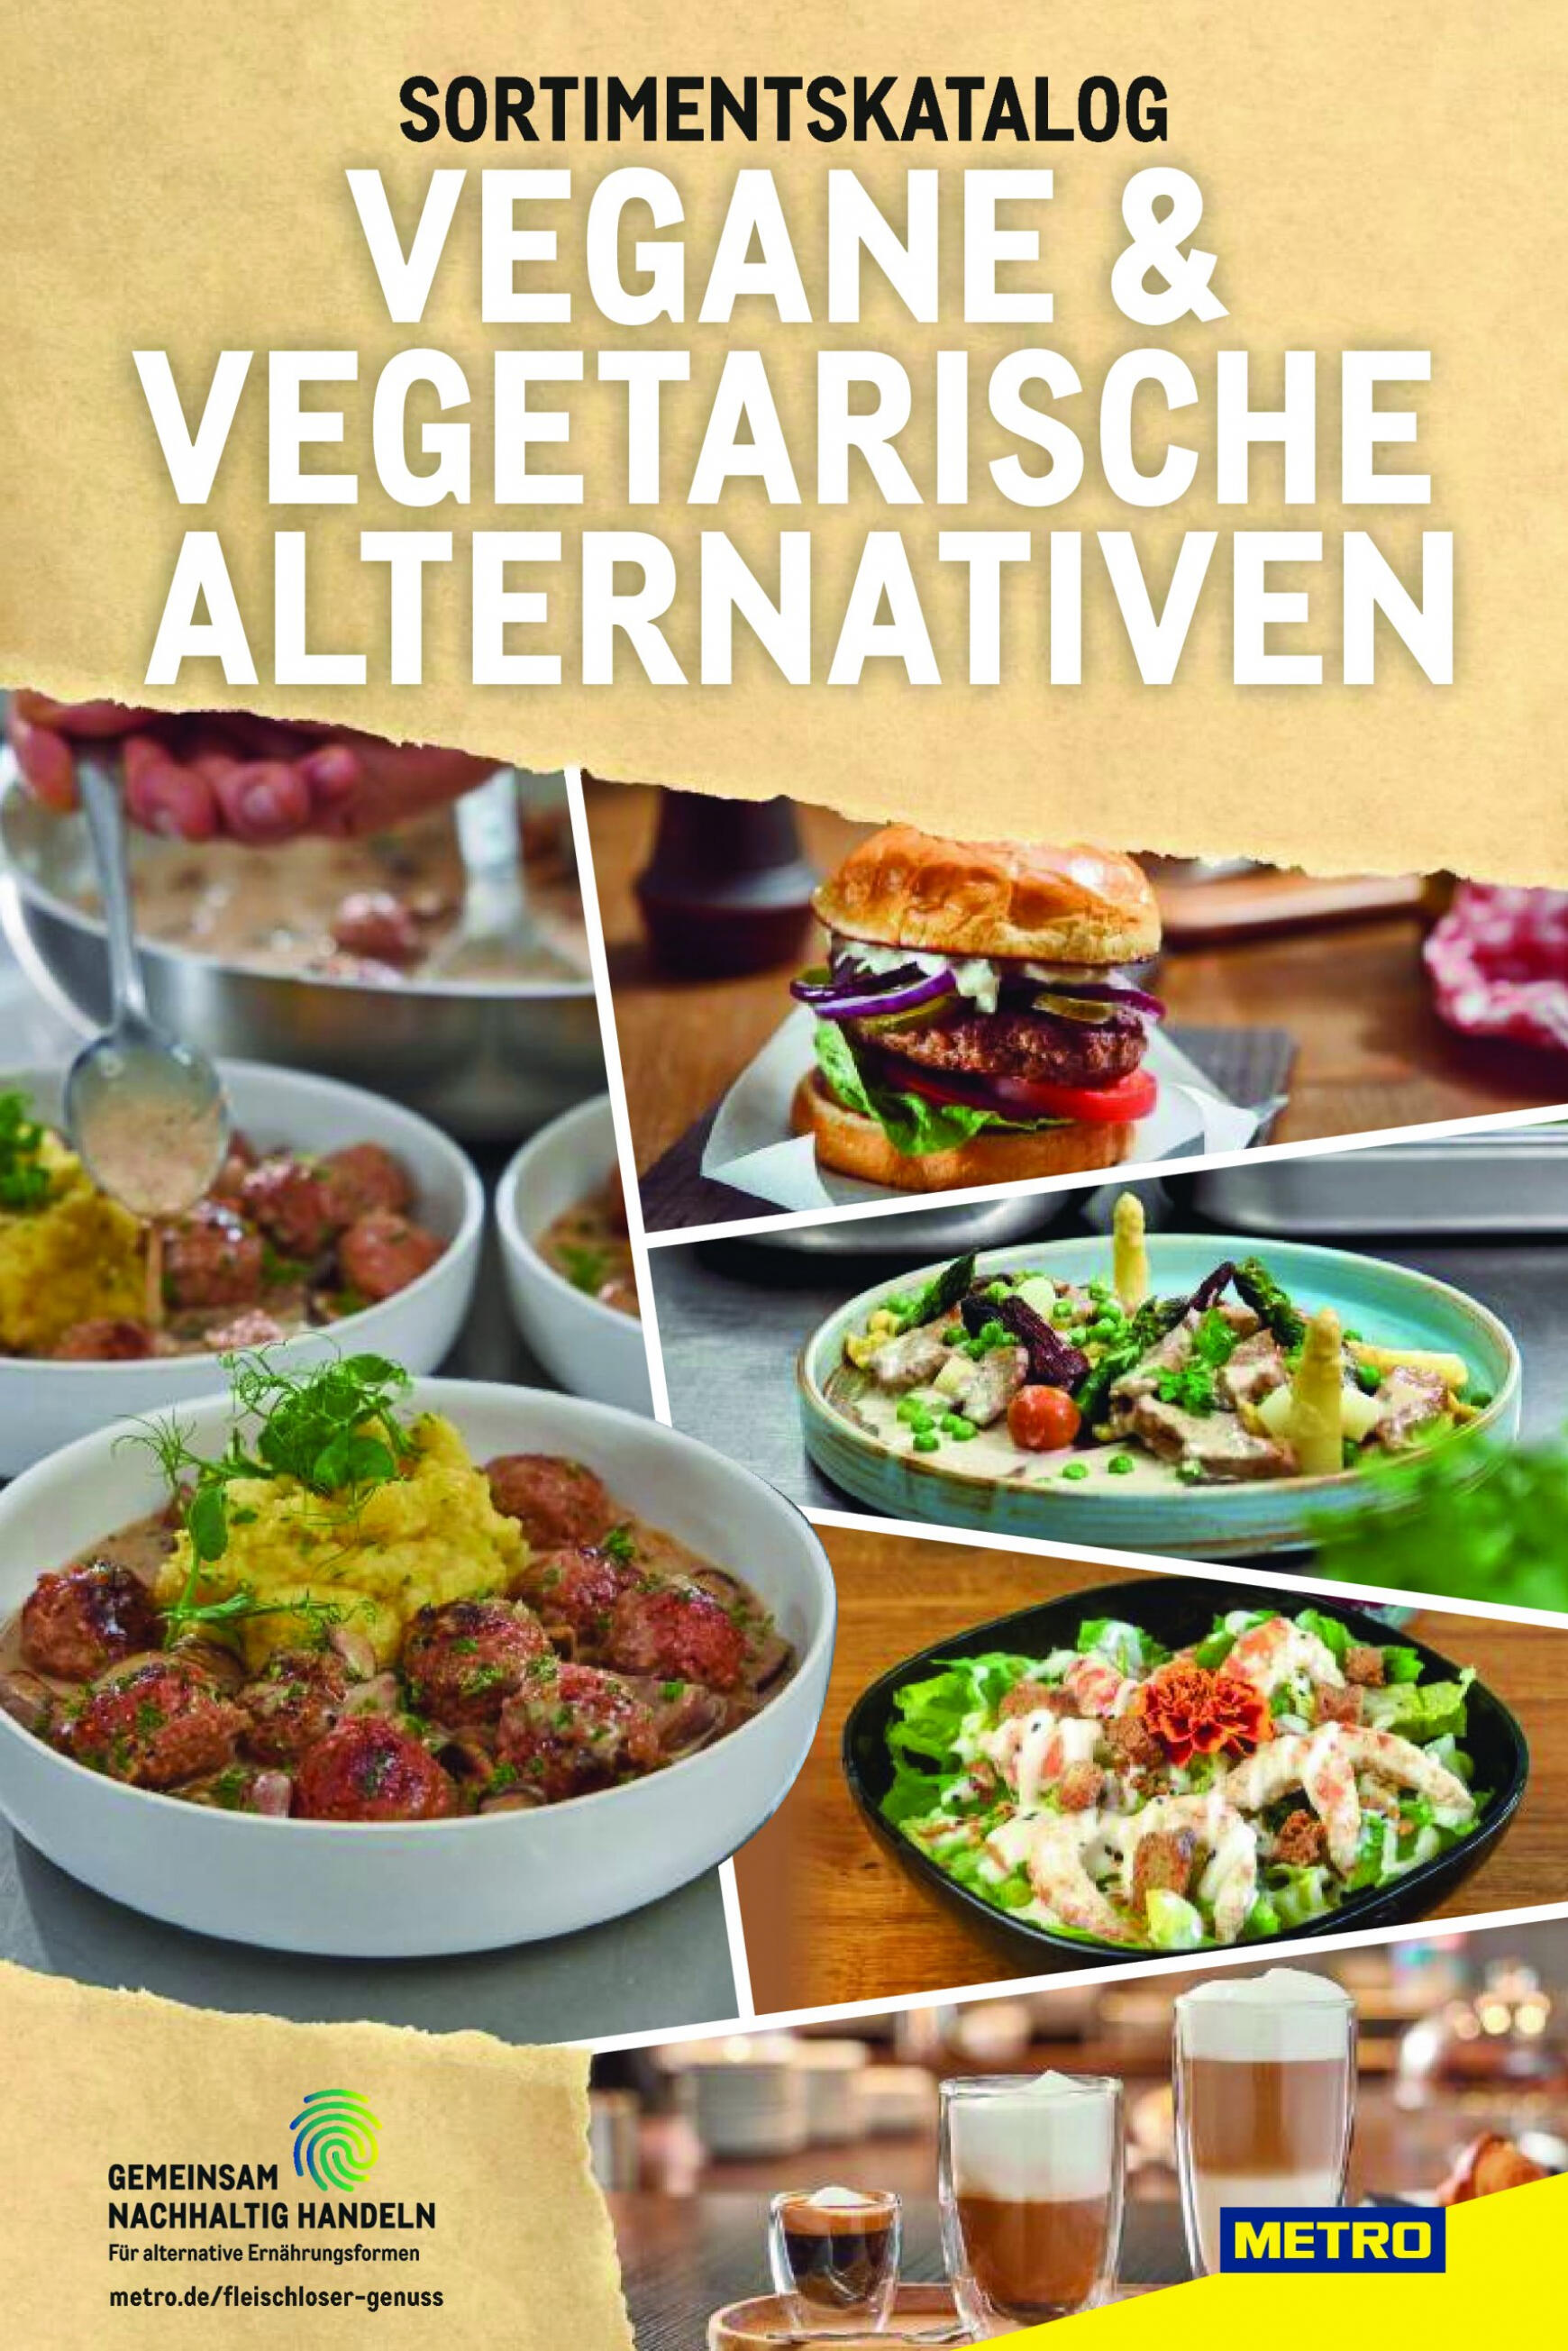 metro - Flyer Metro - Sortimentskatalog Vegane & Vegetarische Alternativen aktuell 17.07. - 31.12.